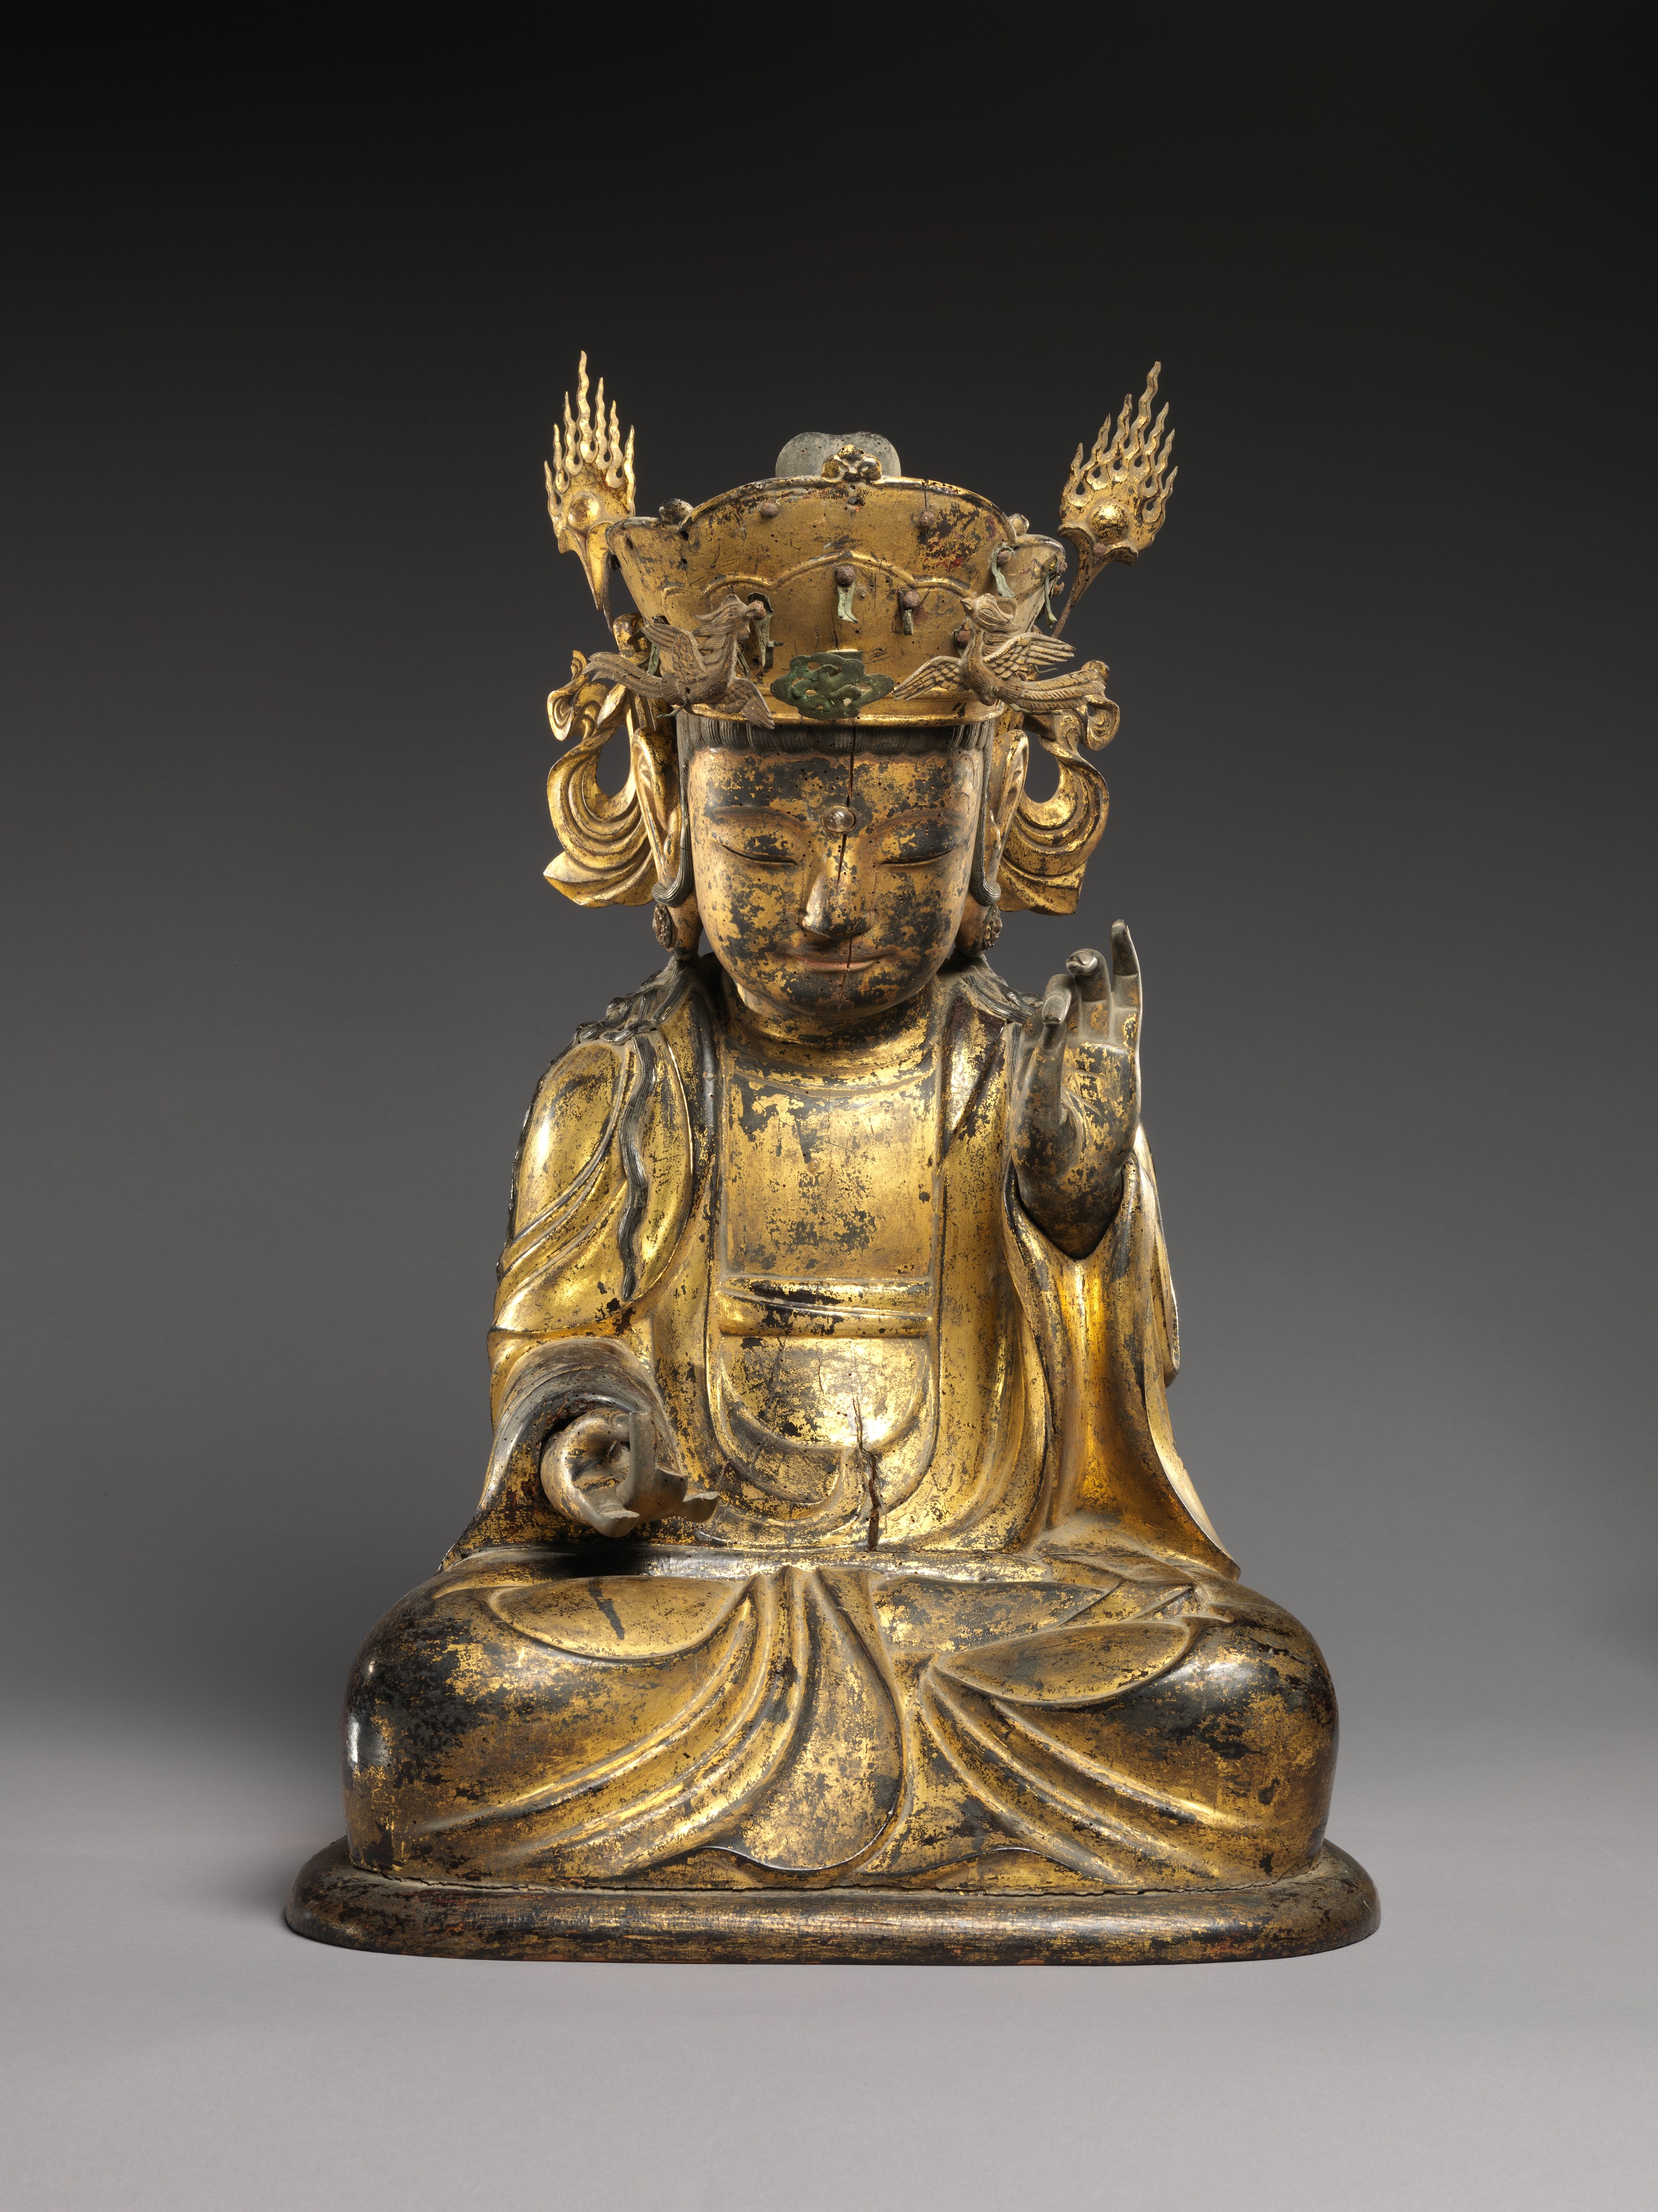 Seated Bodhisattva (left attendant of a triad) - Wikipedia